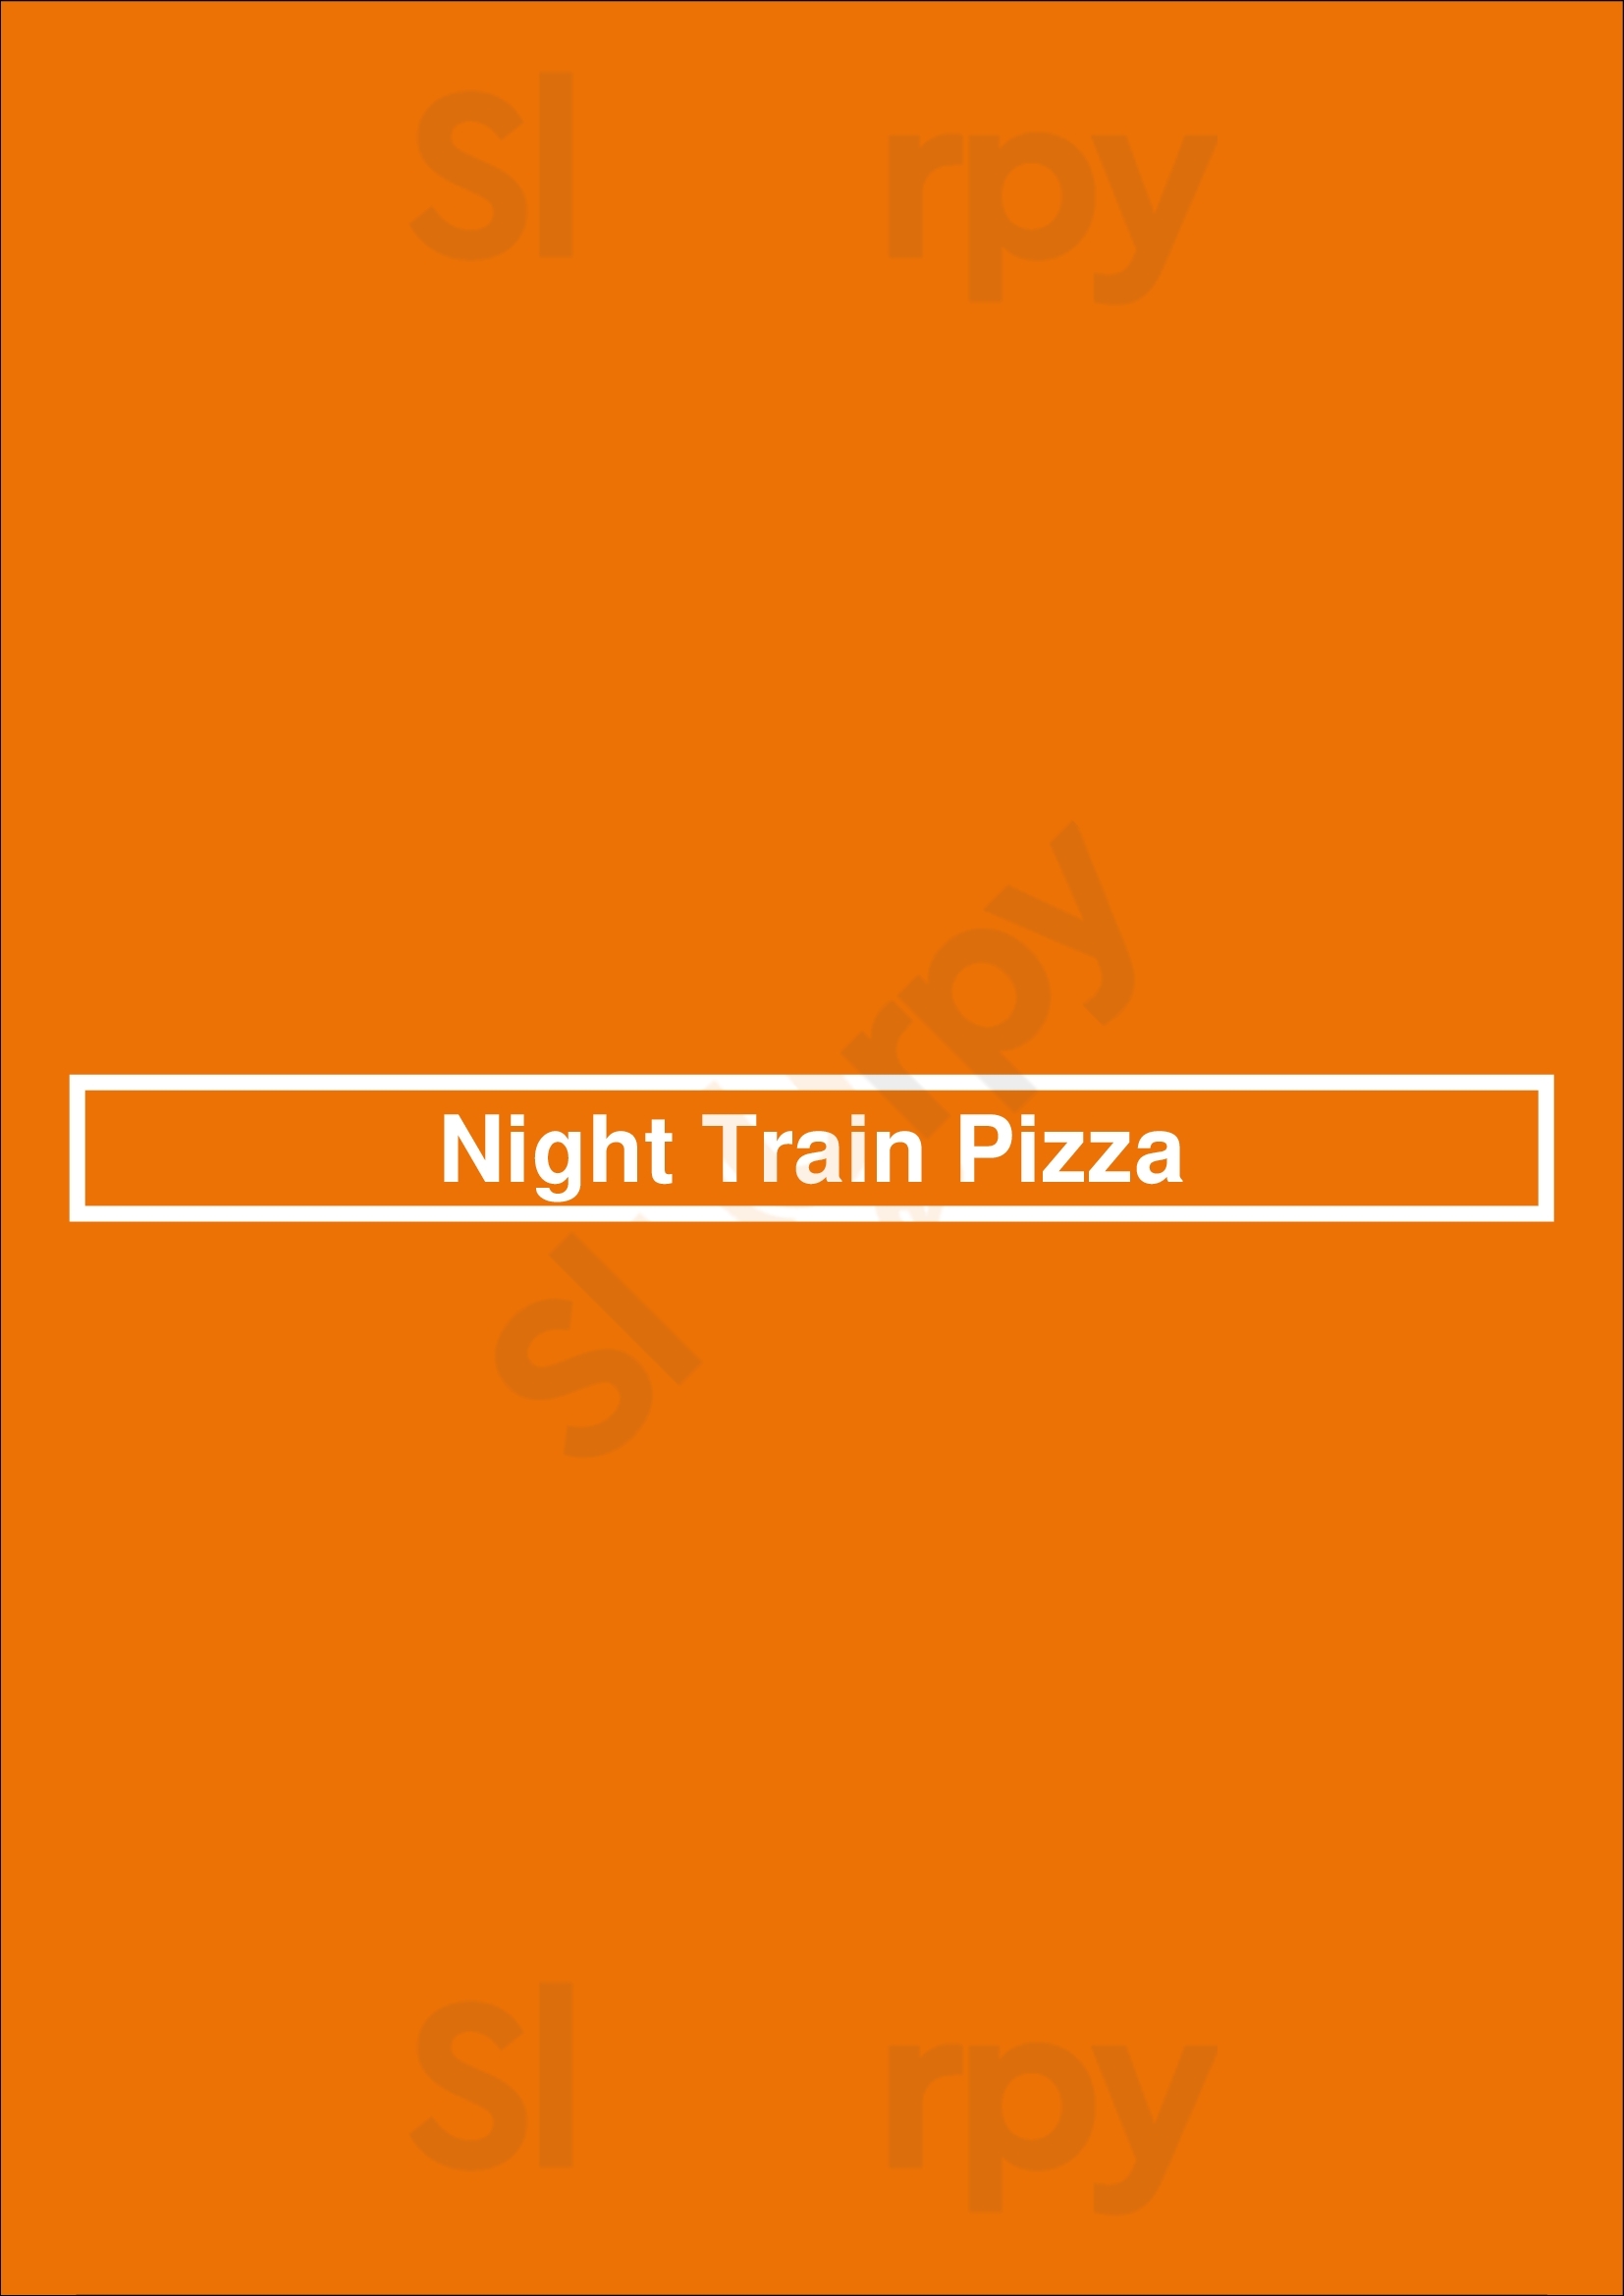 Night Train Pizza Nashville Menu - 1